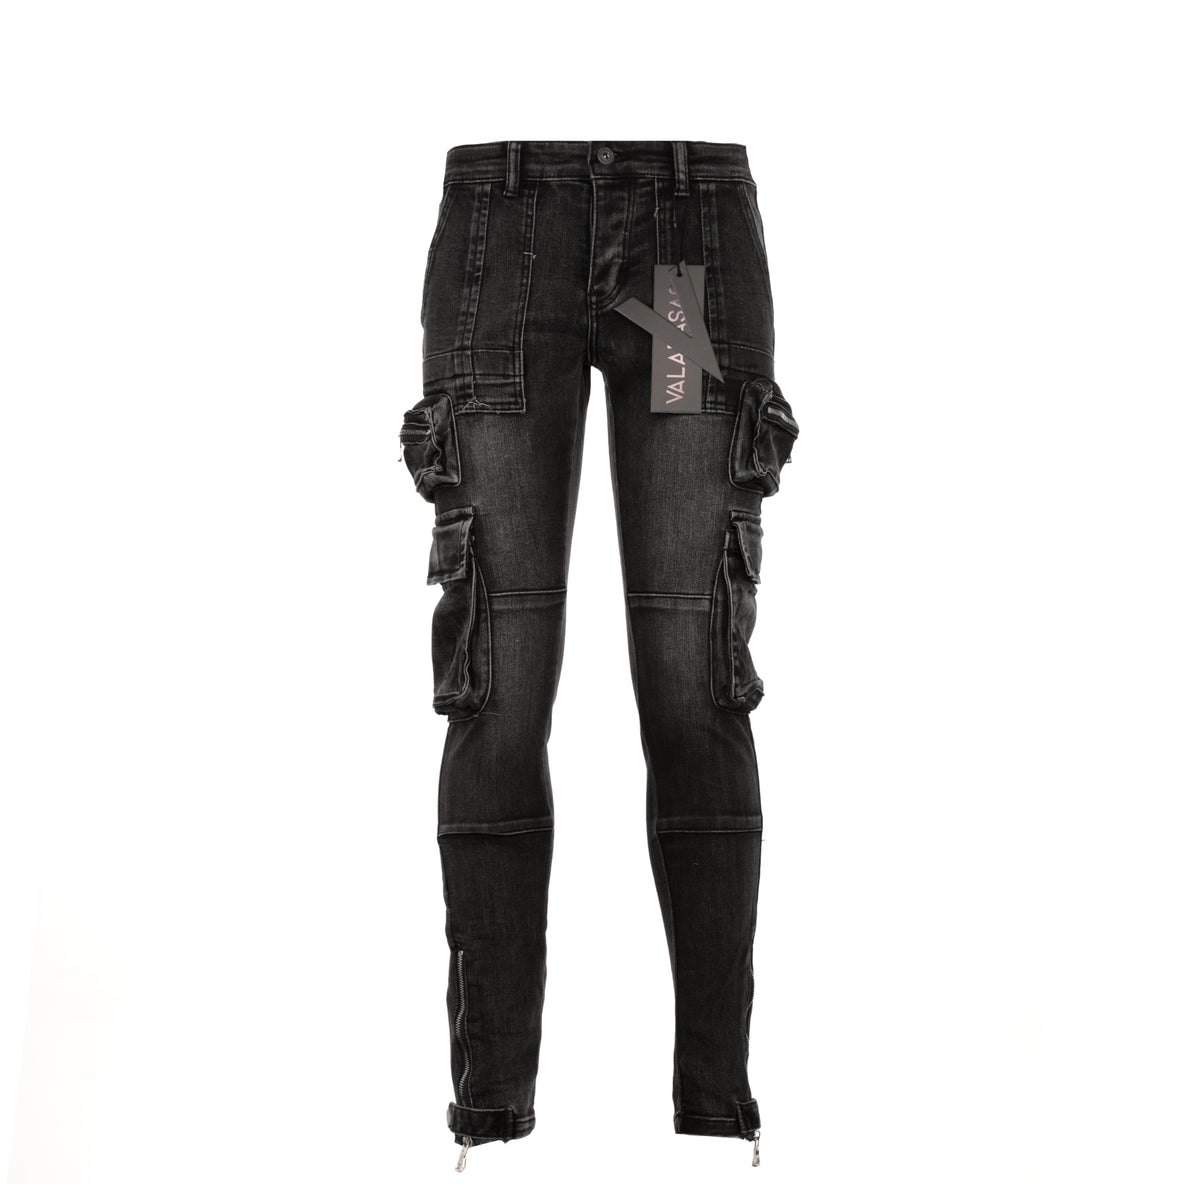 Valabasas "Fighter" Men's Skinny Cargo Black Jeans